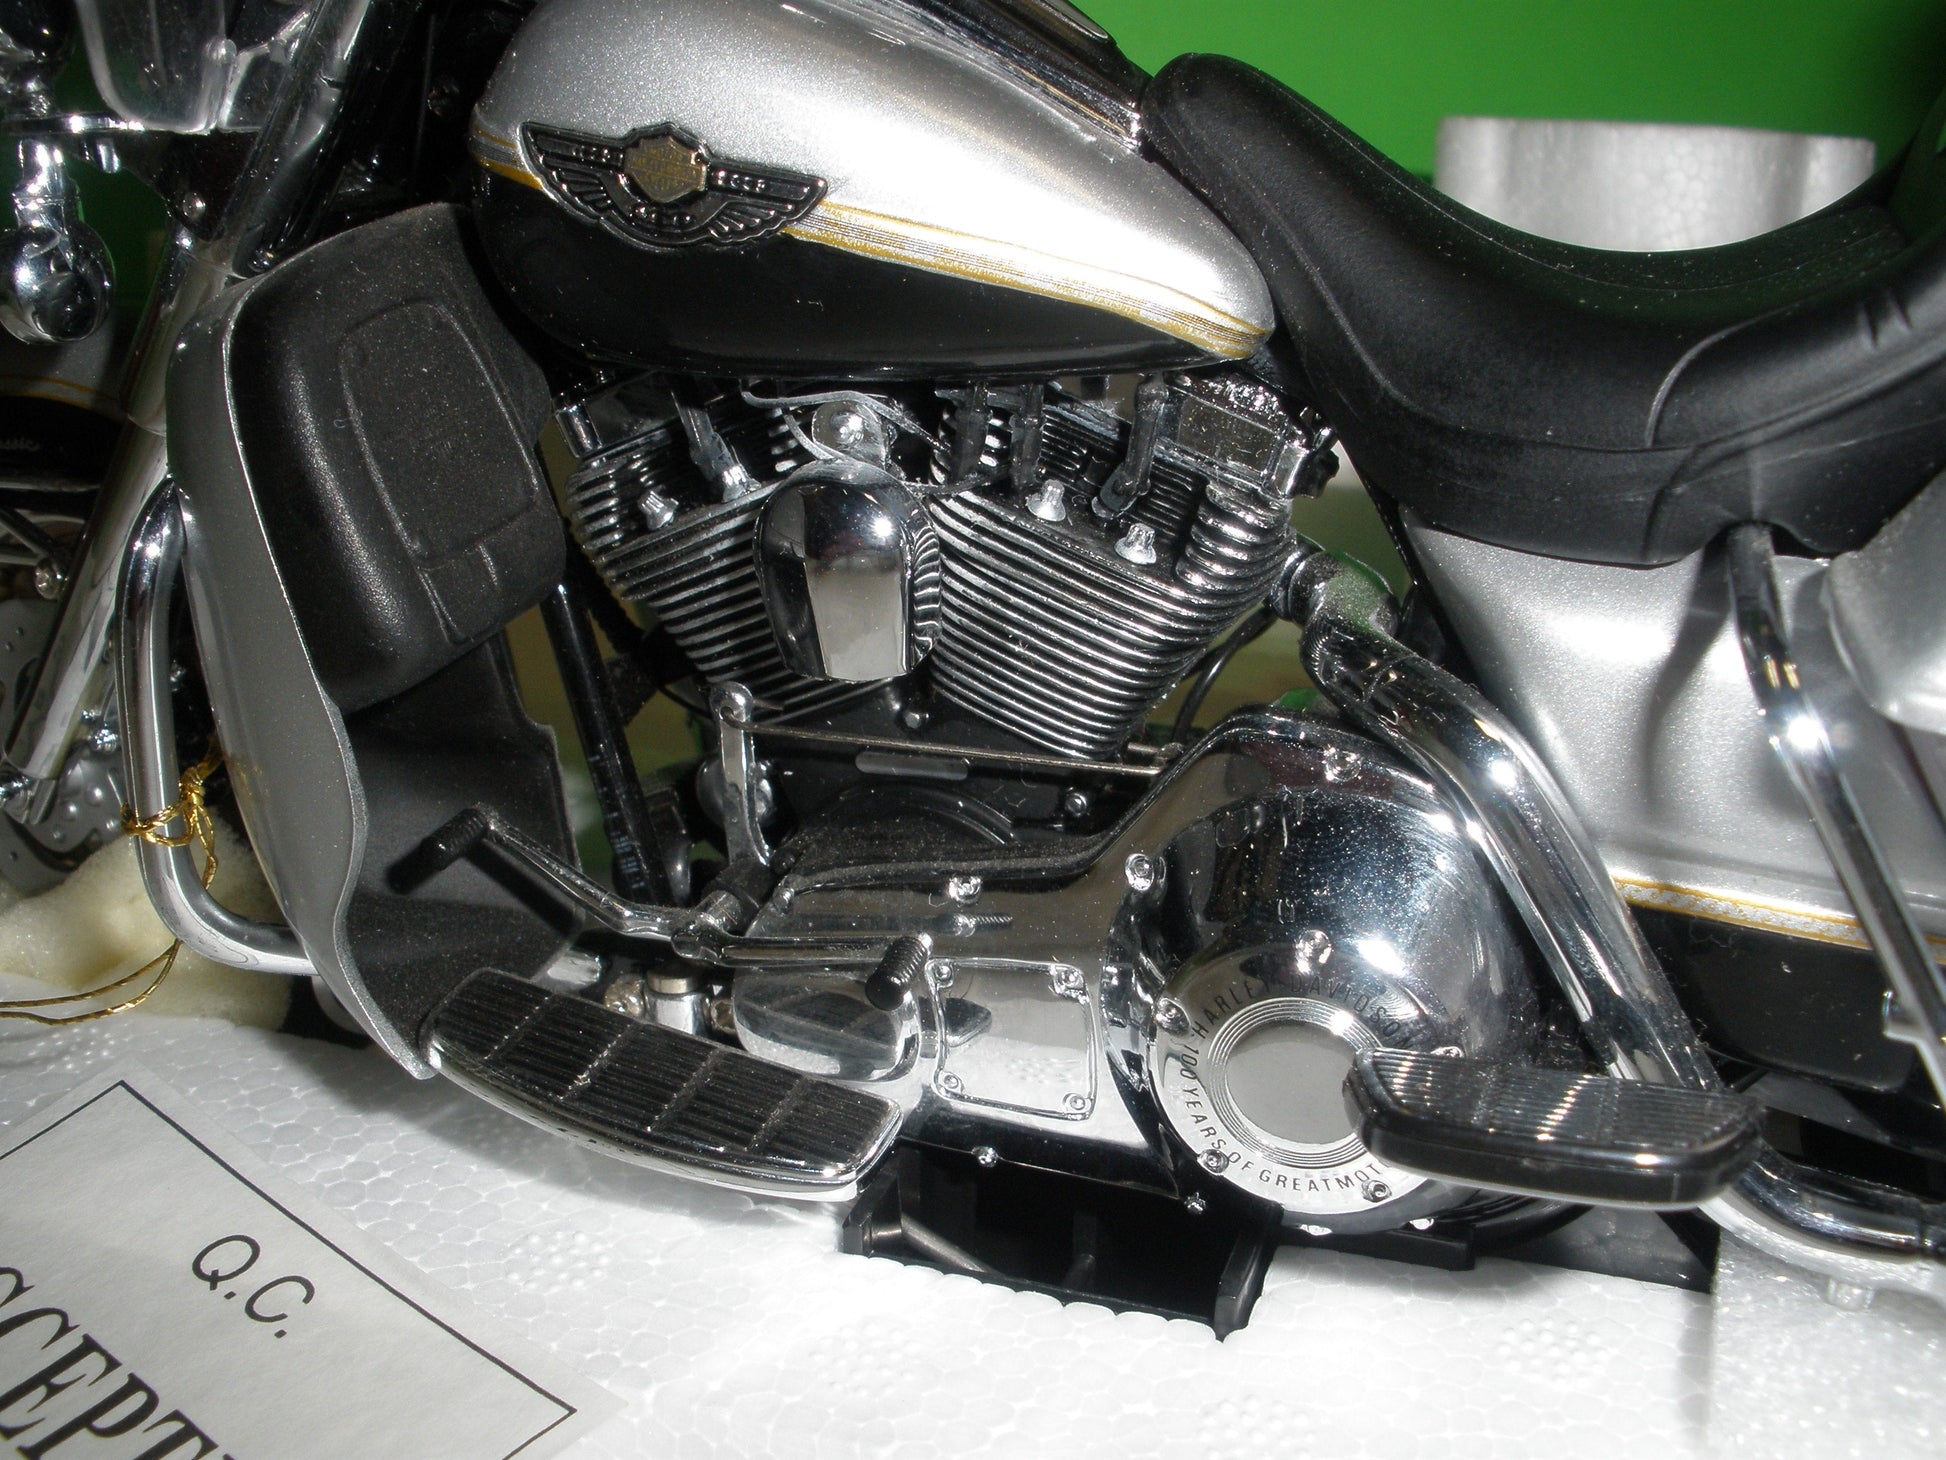 Harley Davidson 2003 Electra Glide Motorcycle - B11ZN04